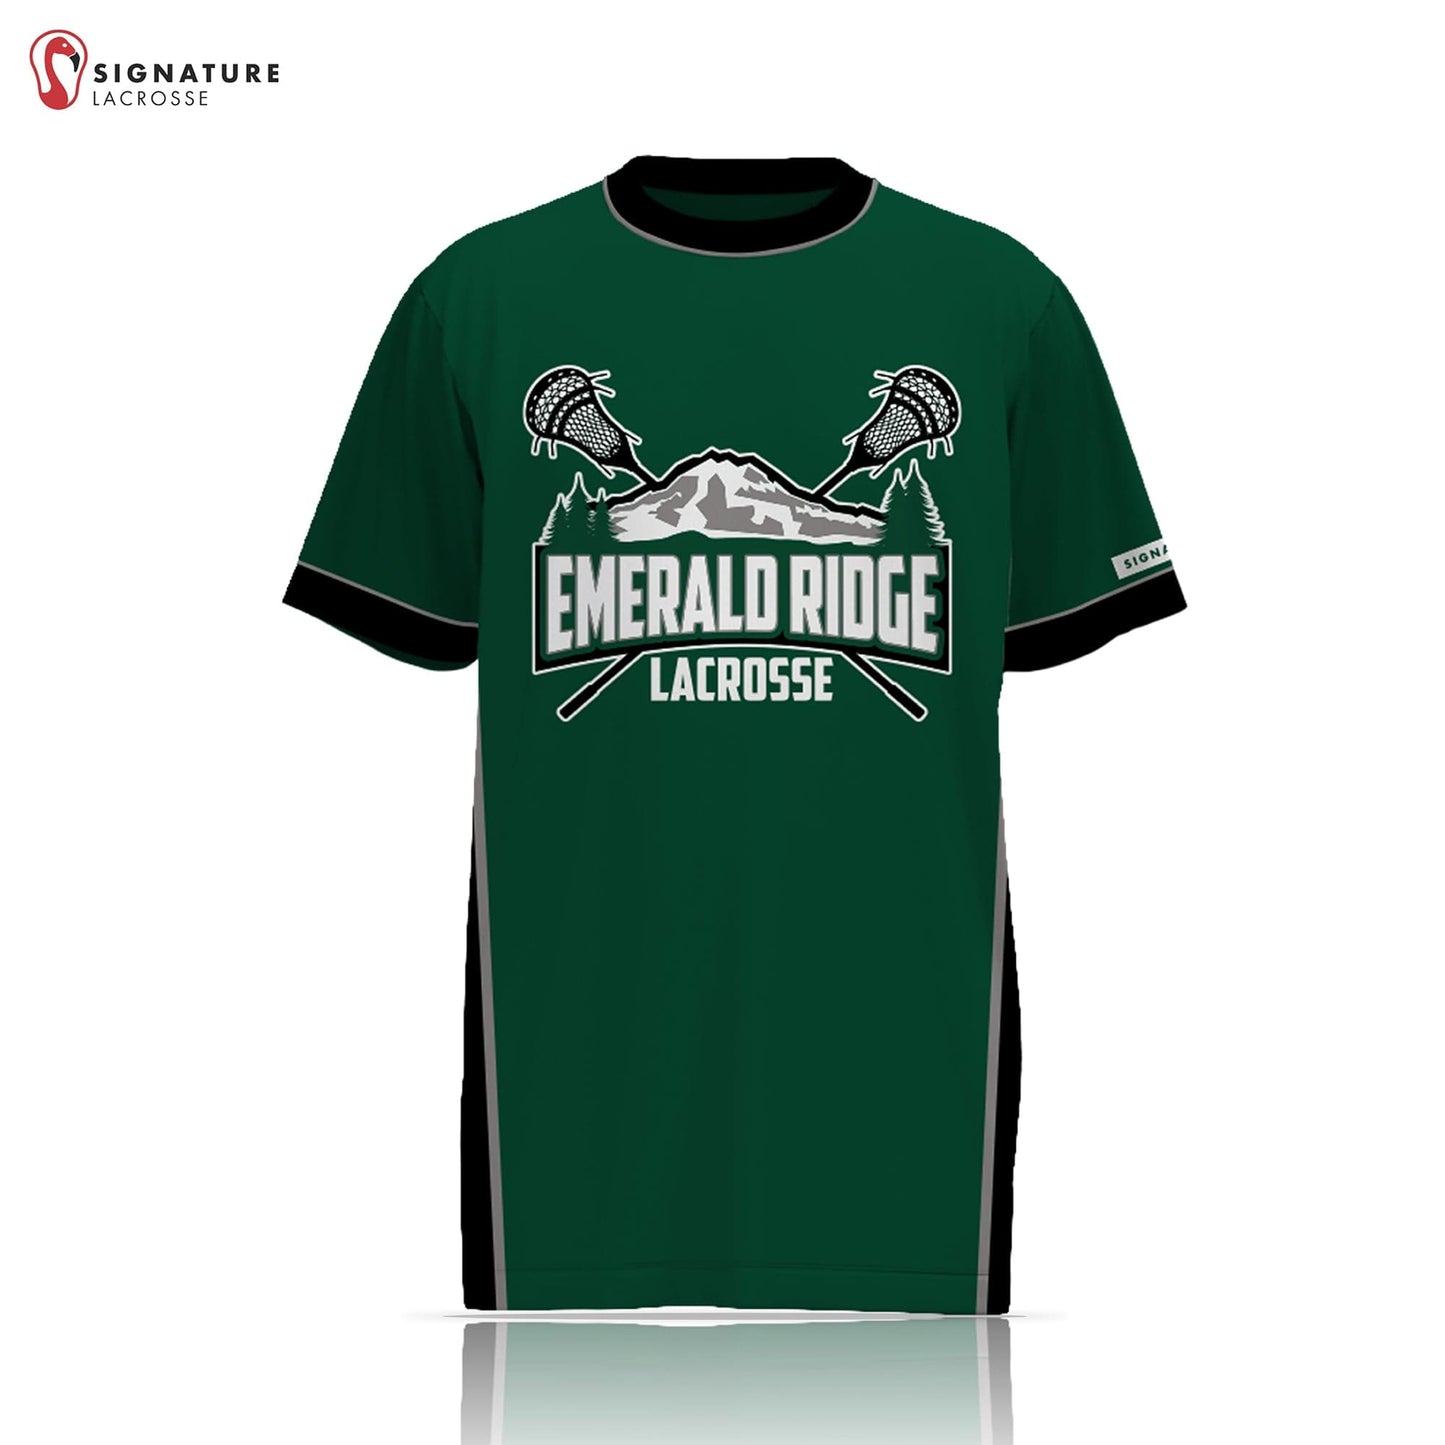 Emerald Ridge Lacrosse Men’s 4 Piece Game Package Signature Lacrosse